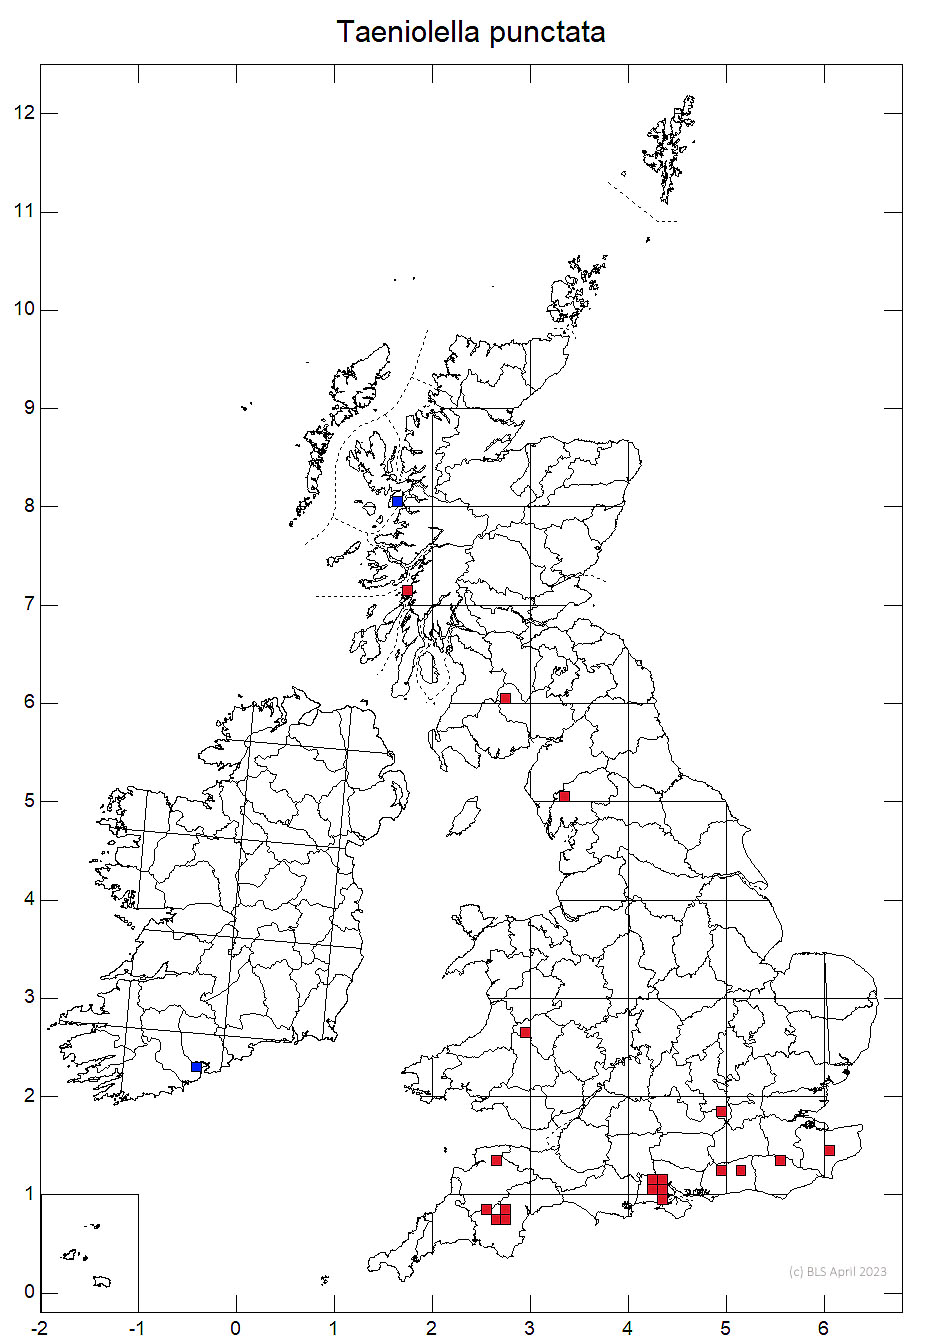 Taeniolella punctata 10km sq distribution map